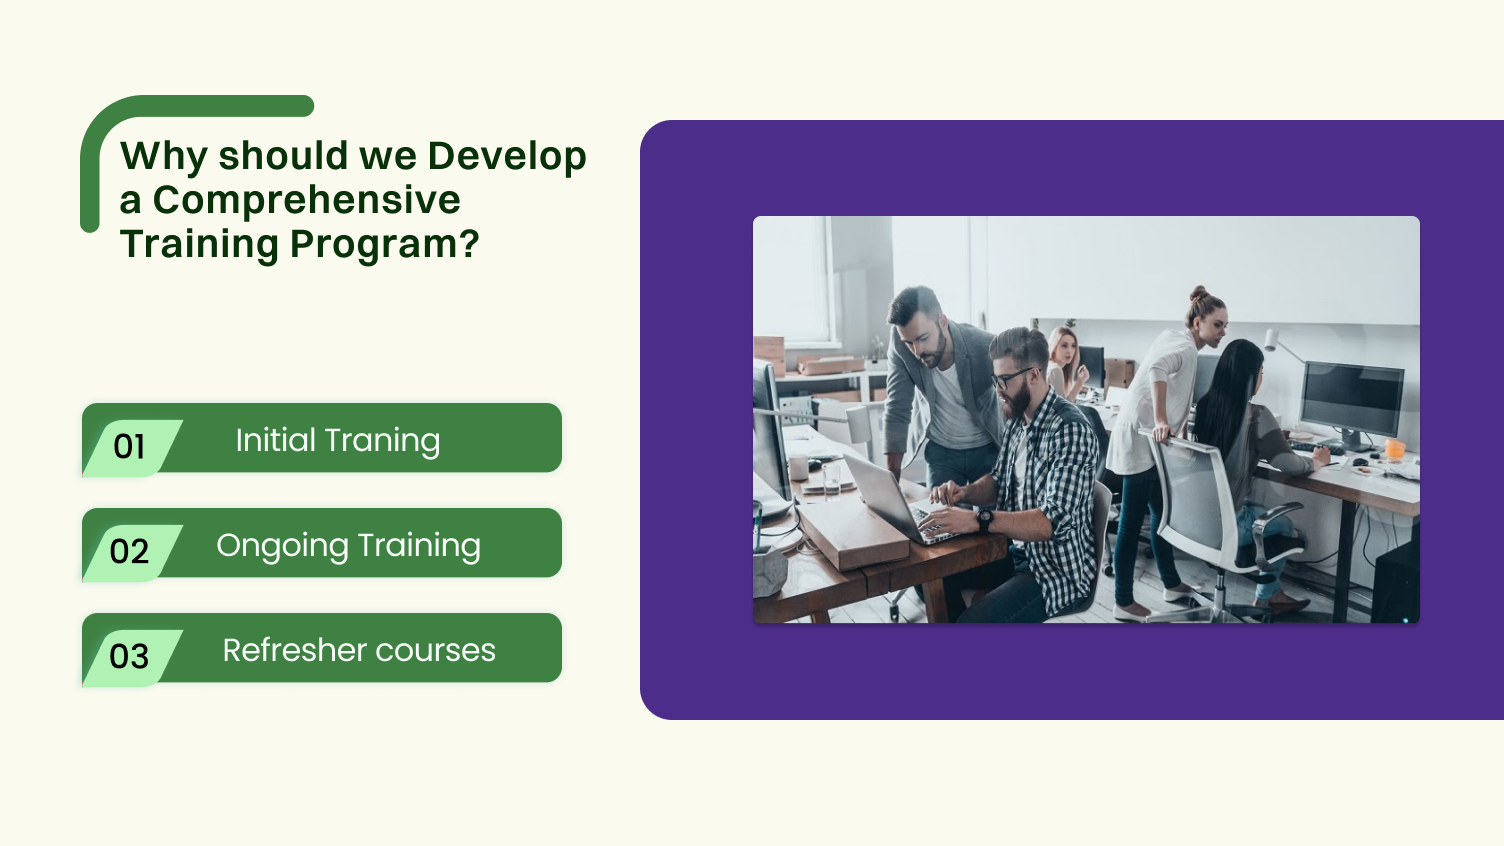 Why should we develop a comprehensive training program?